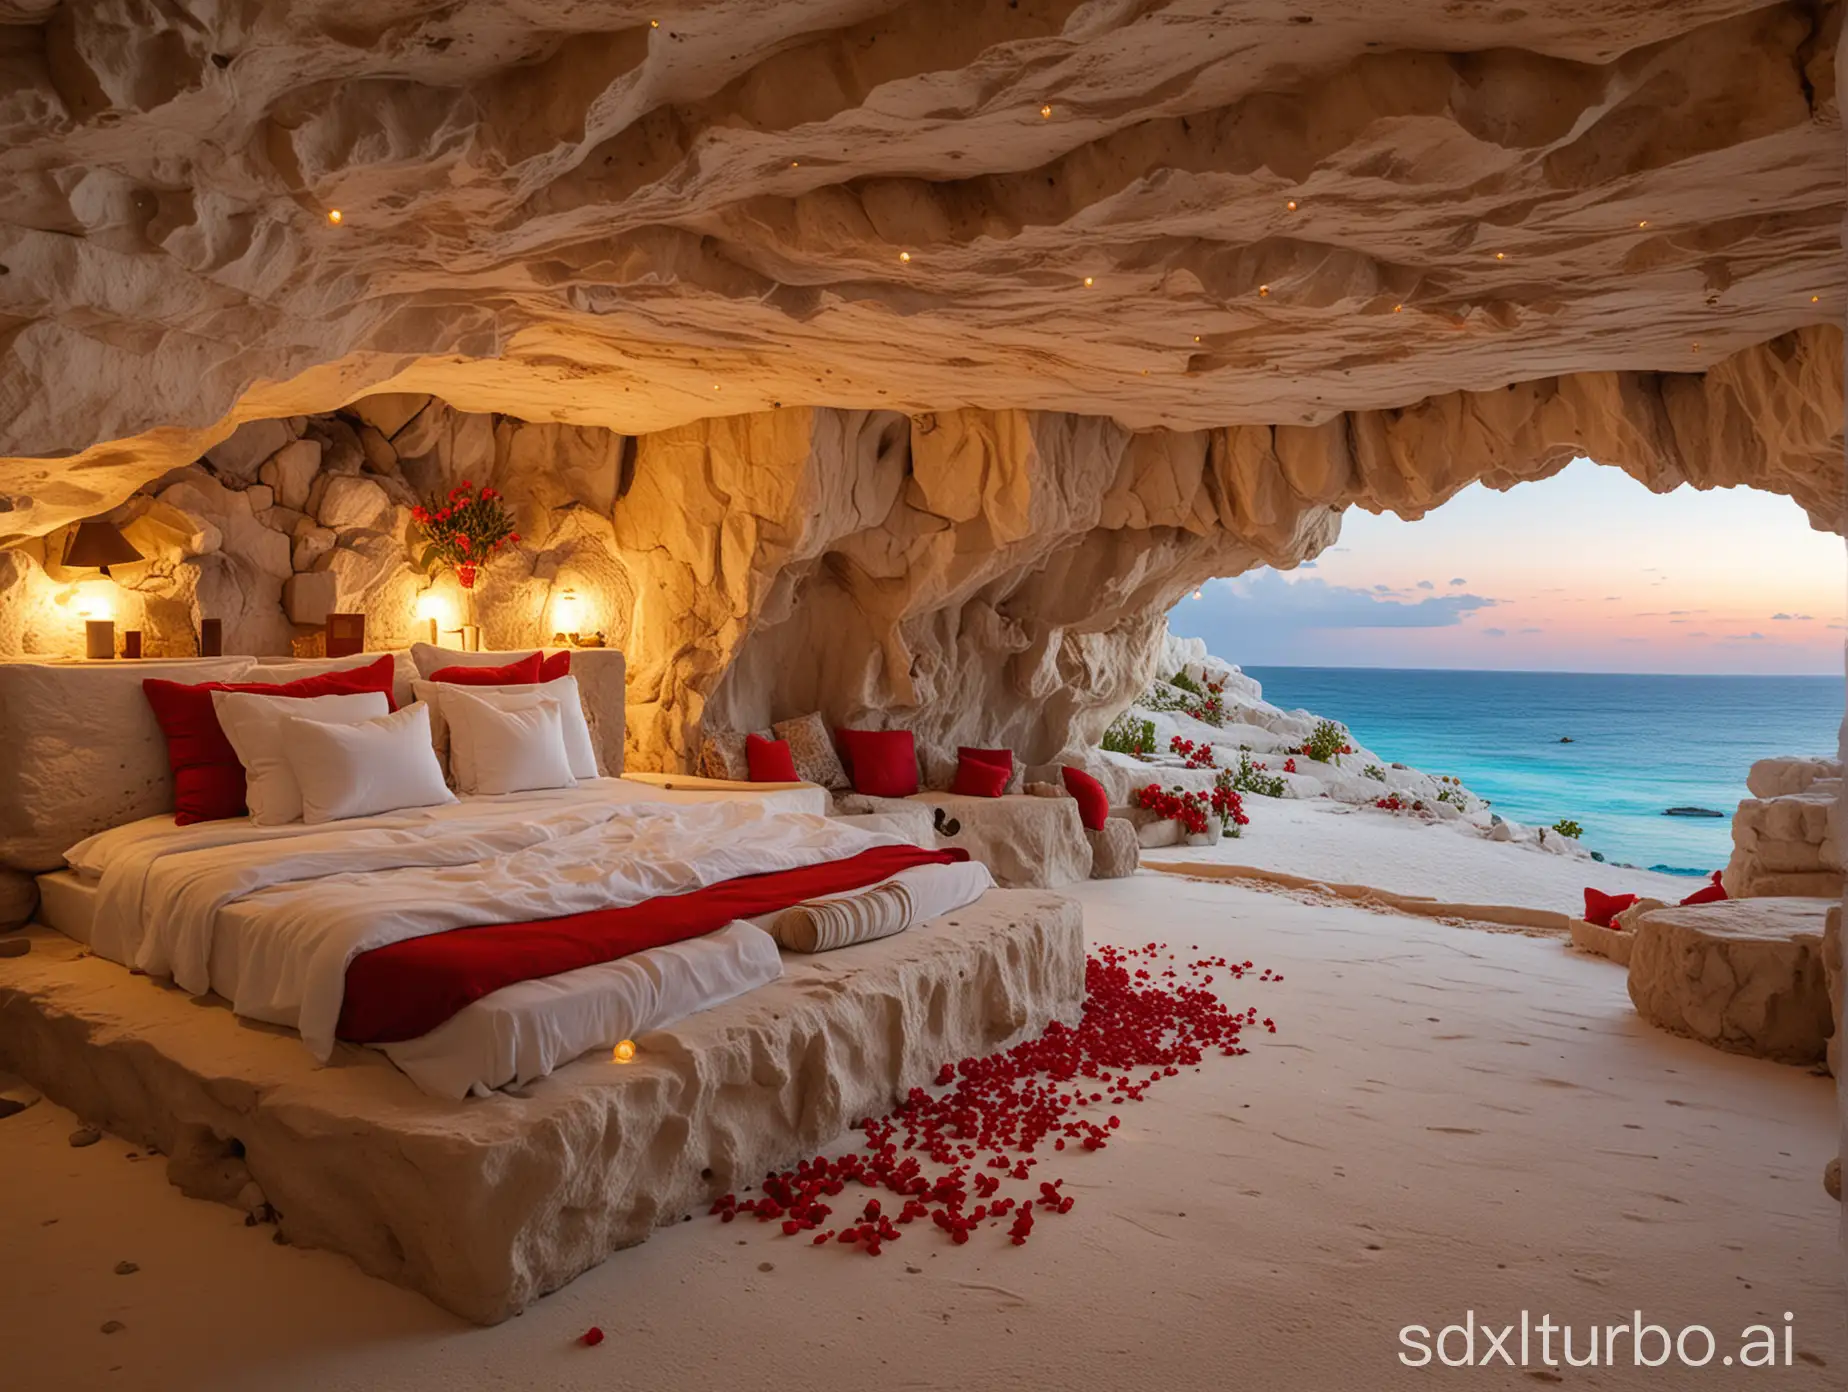 Cozy-Caribbean-Cave-Bedroom-Overlooking-Sunset-Beach